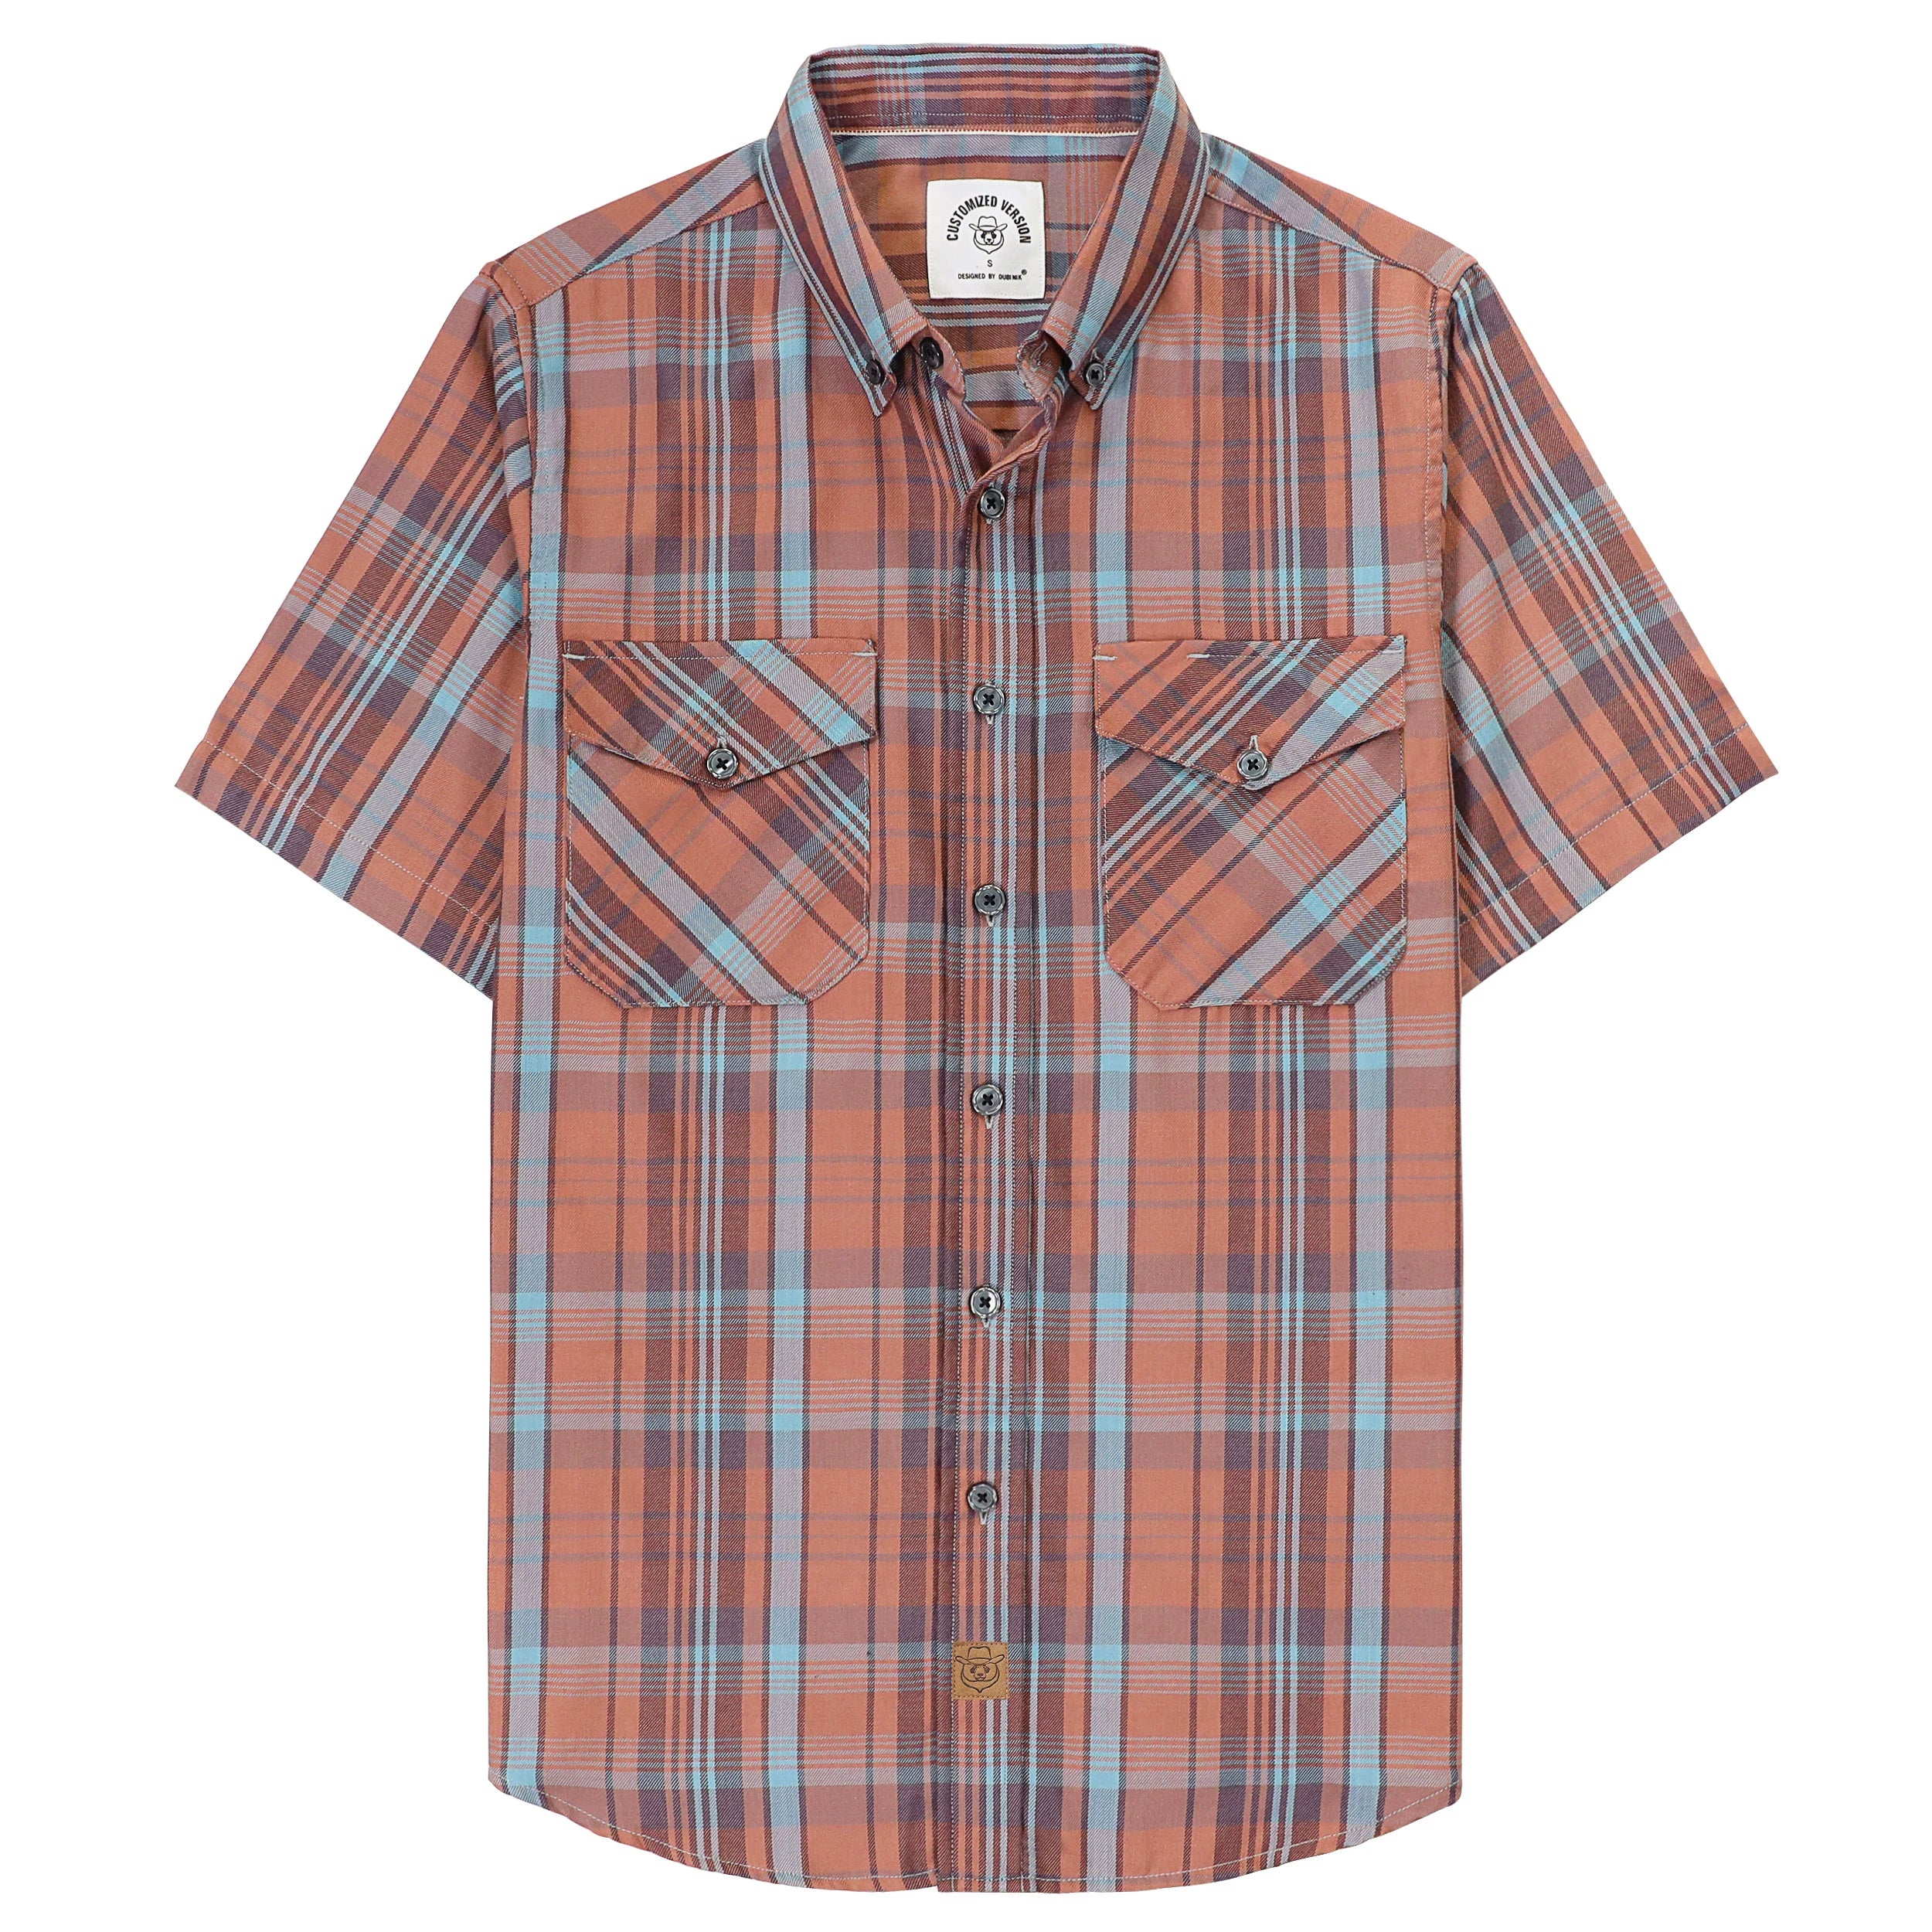 Dubinik® Bamboo Viscose Mens Short Sleeve Button Down Pockets Shirts#39016